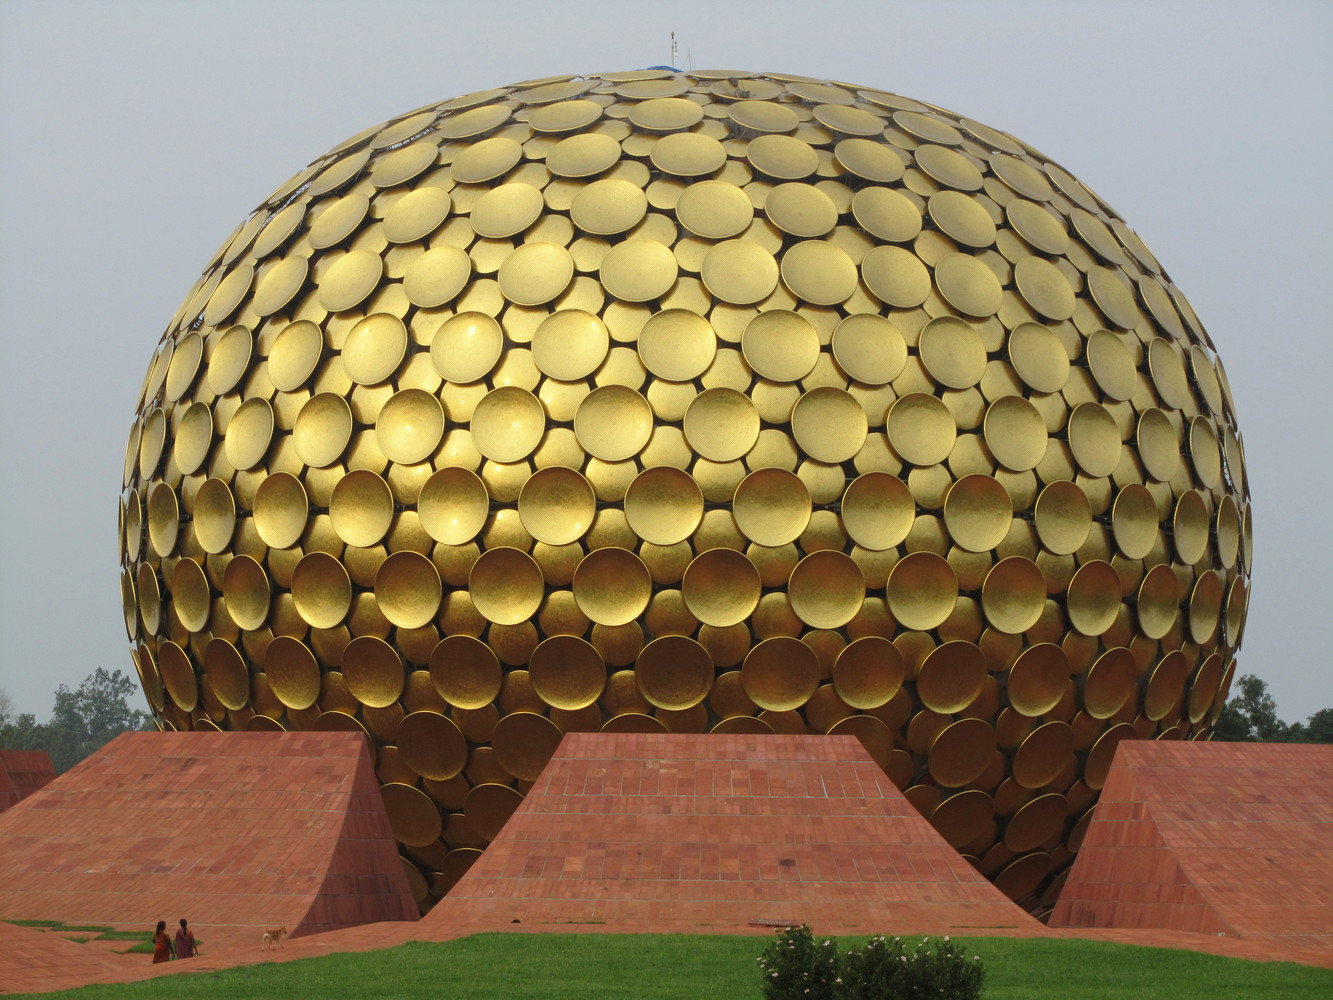 A huge golden metallic sphere supported by large orange petals